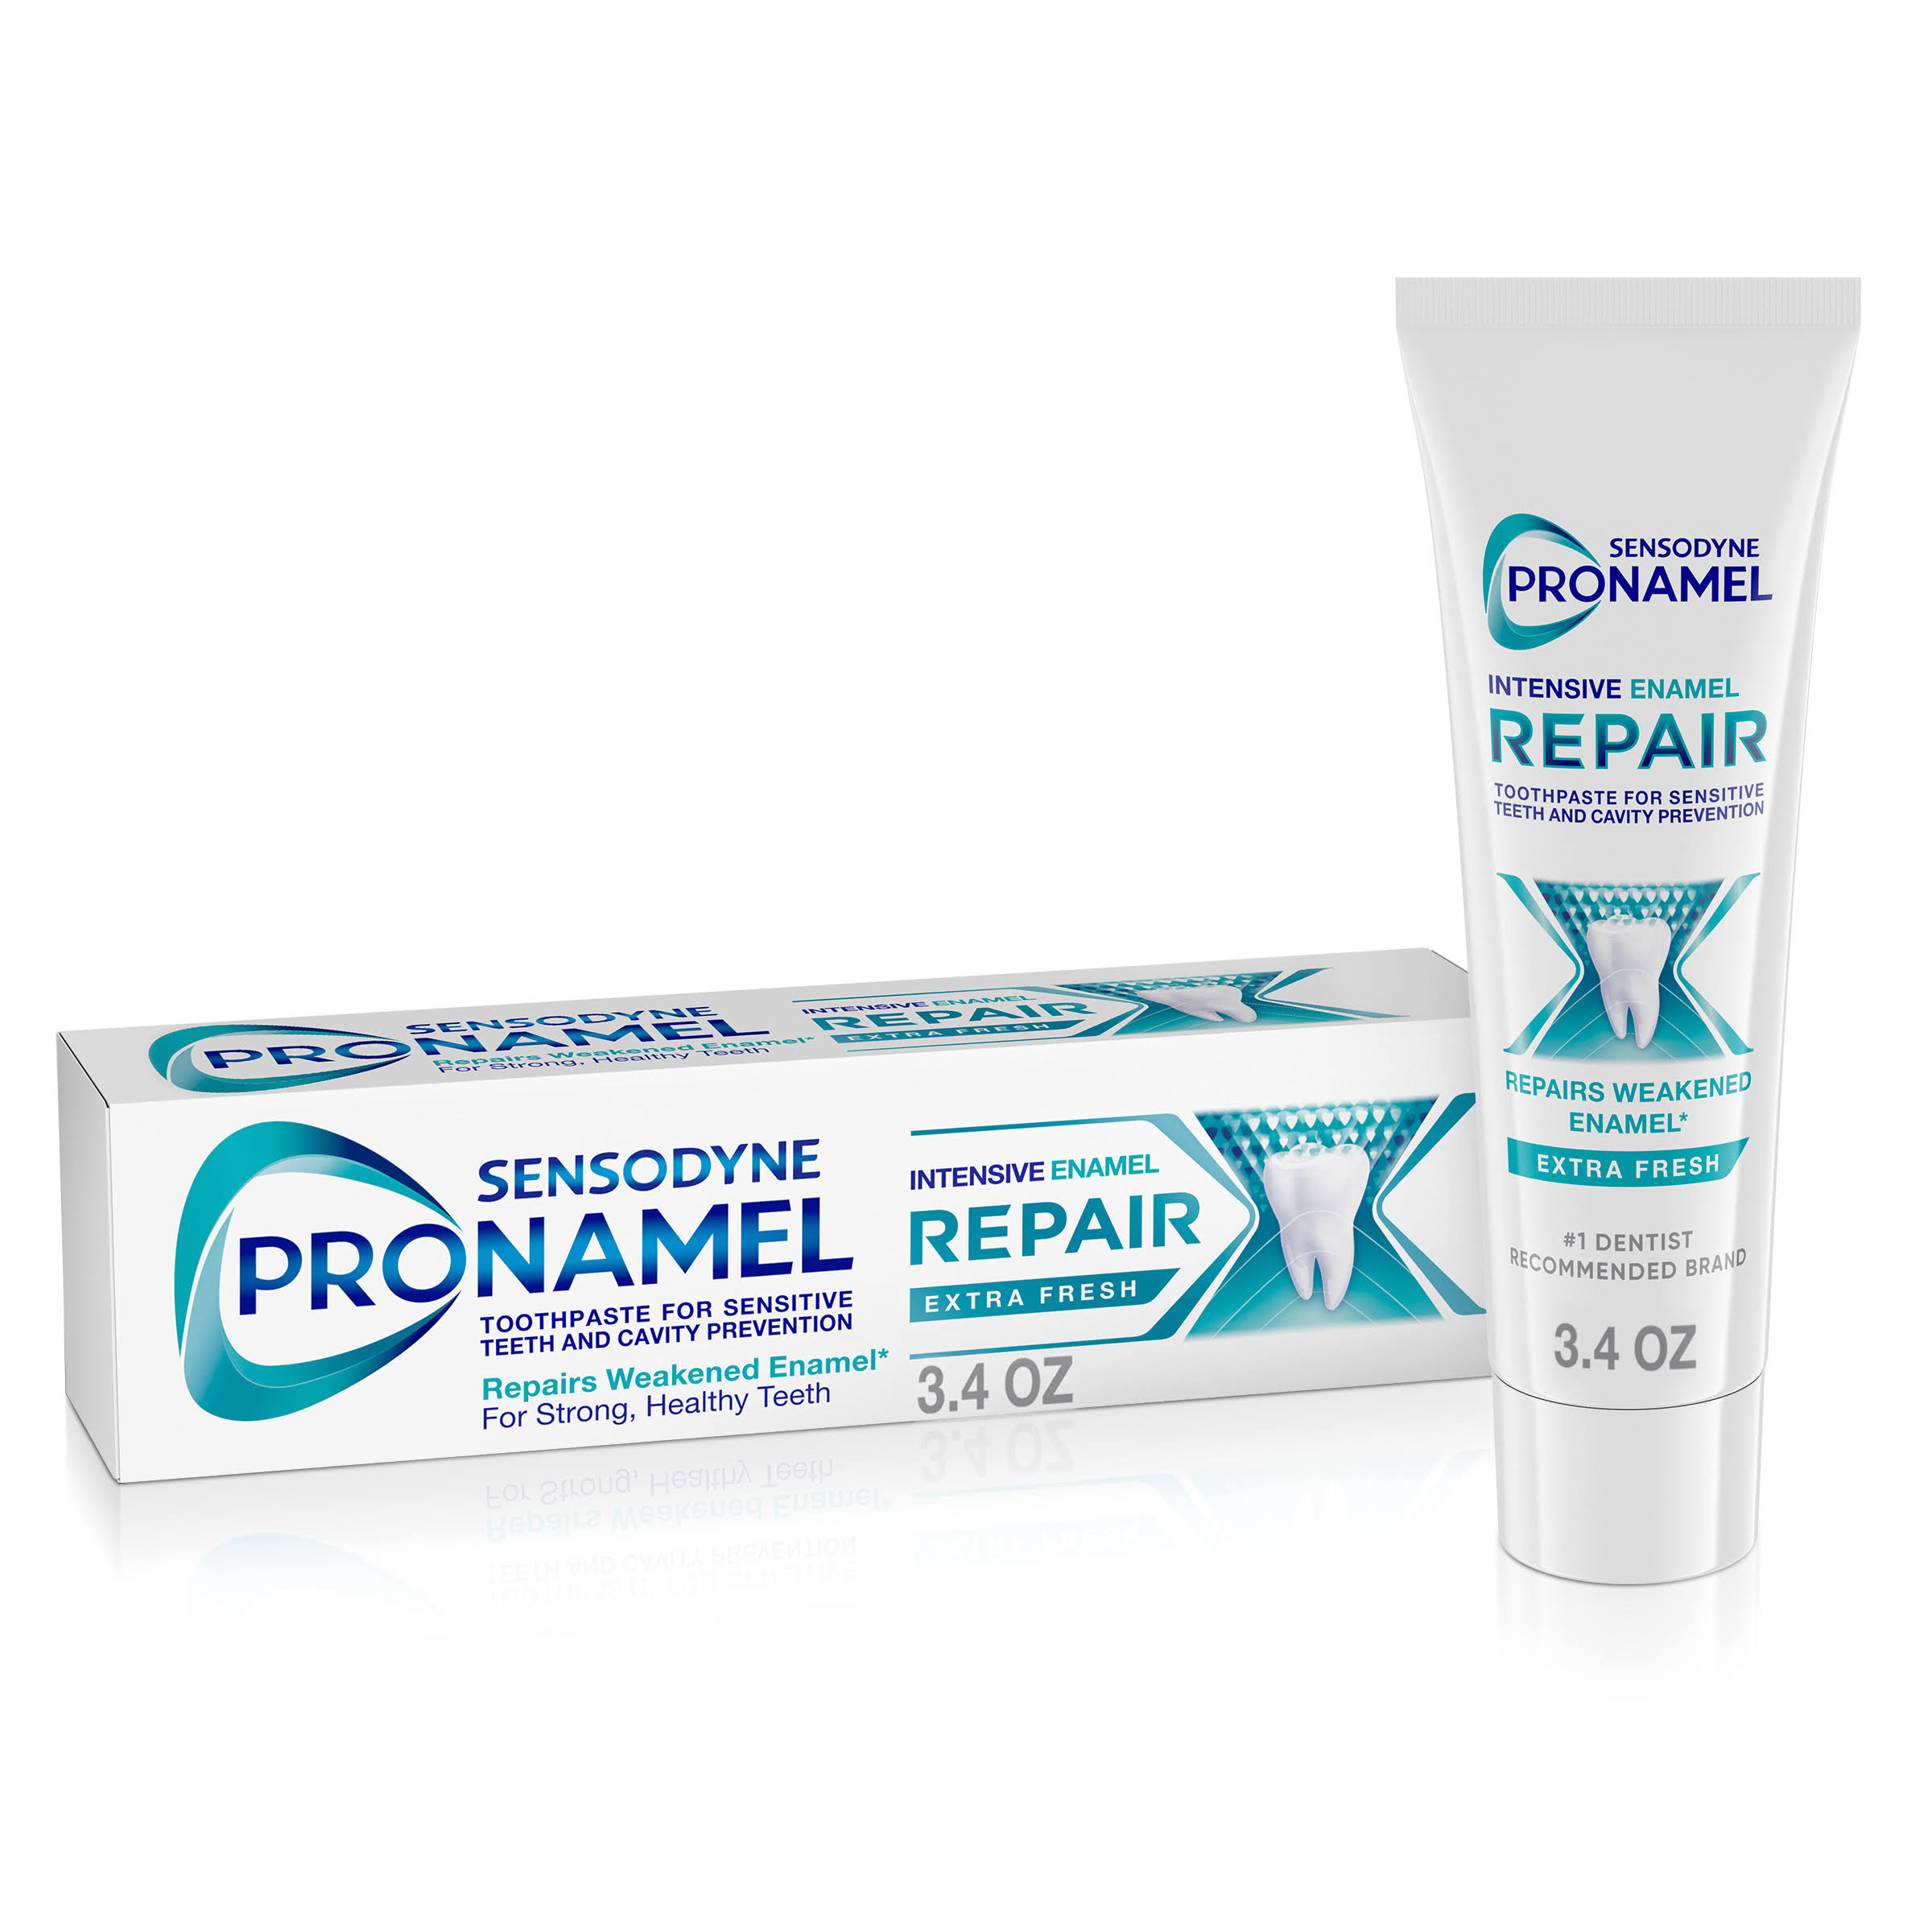 Sensodyne Pronamel Intensive Enamel Repair Extra Fresh Toothpaste - 3.4oz